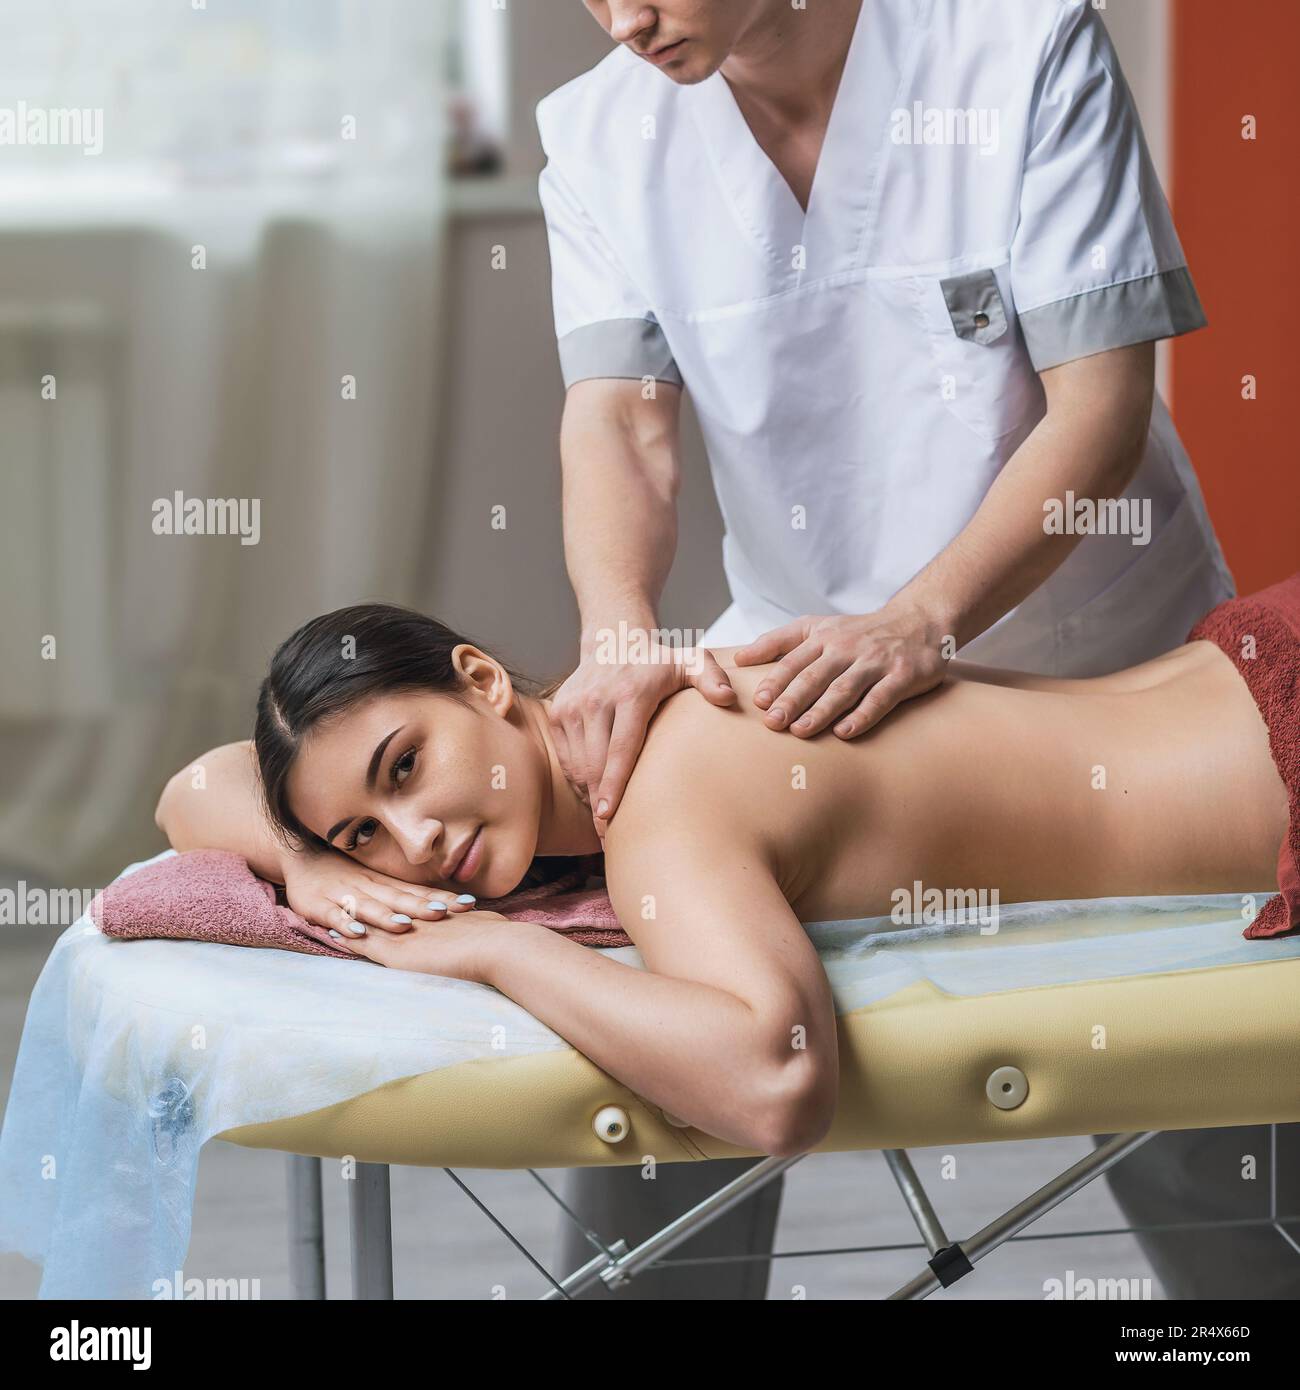 Female Back Massage - Vertical Stock Photo - Image of brunette